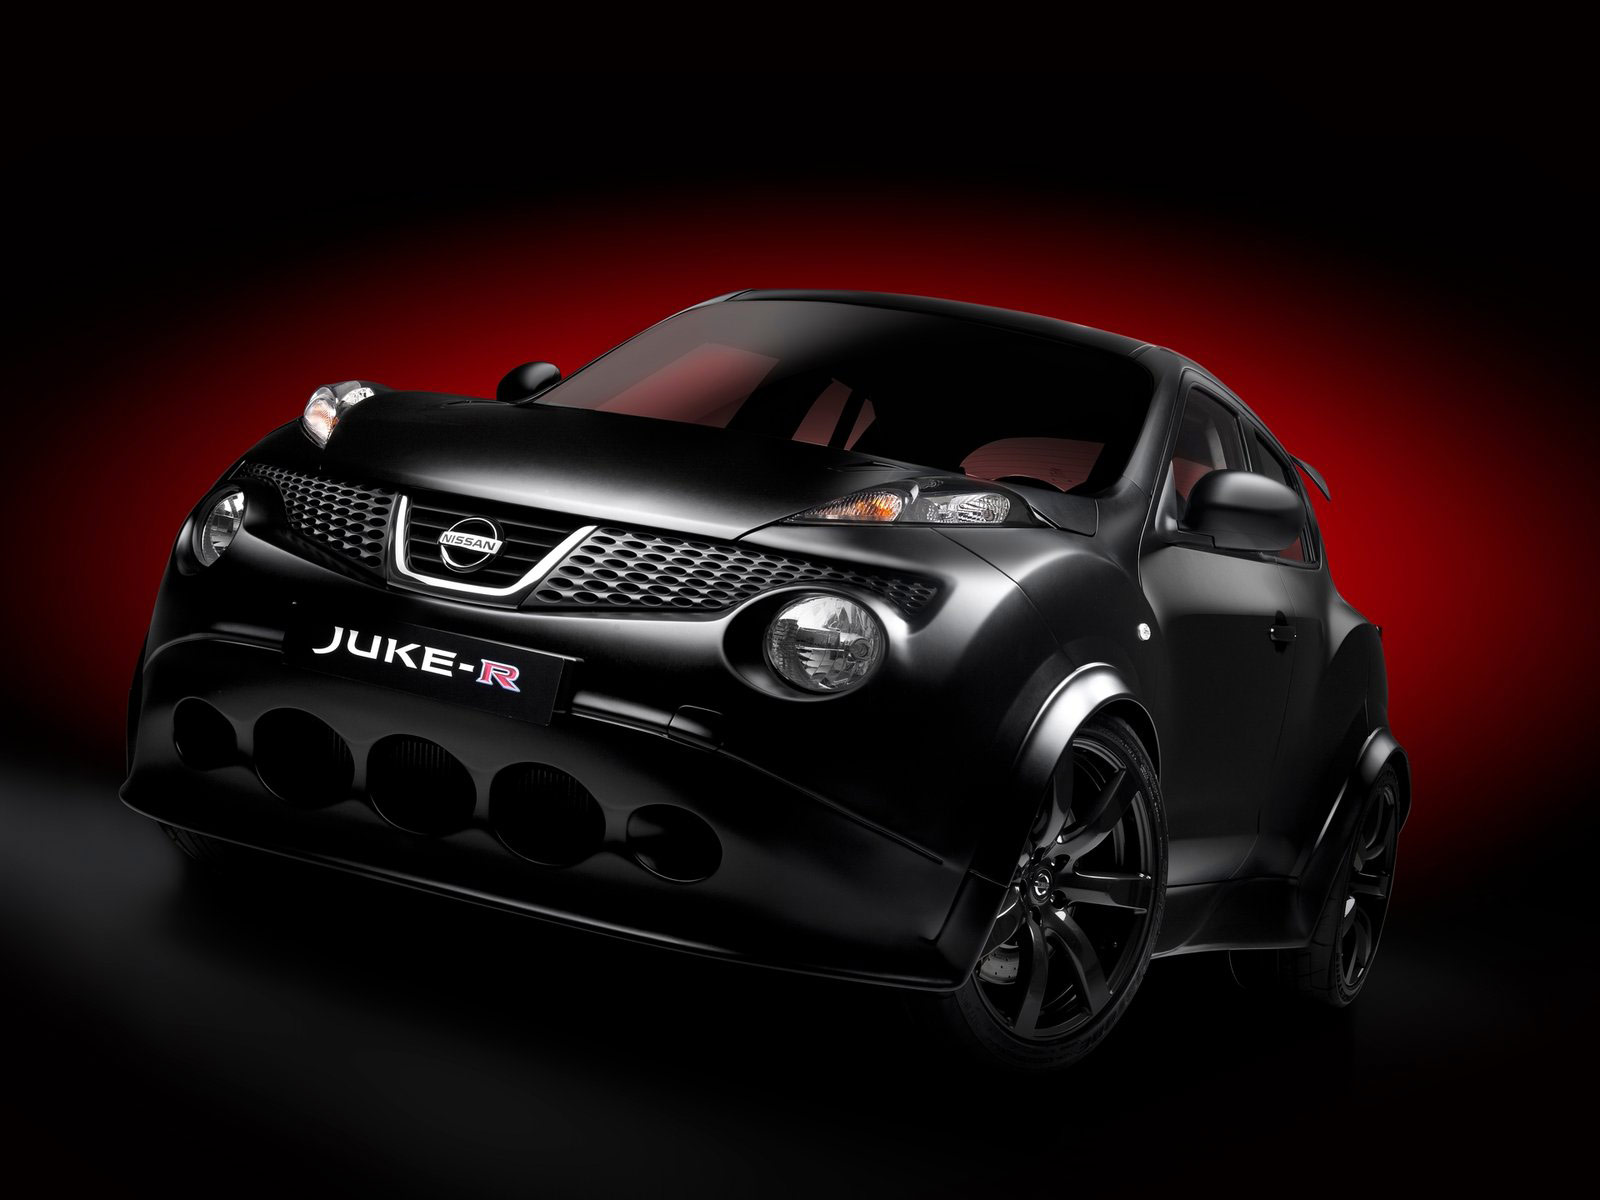 2011 NISSAN JukeR Concept Japanese car photos